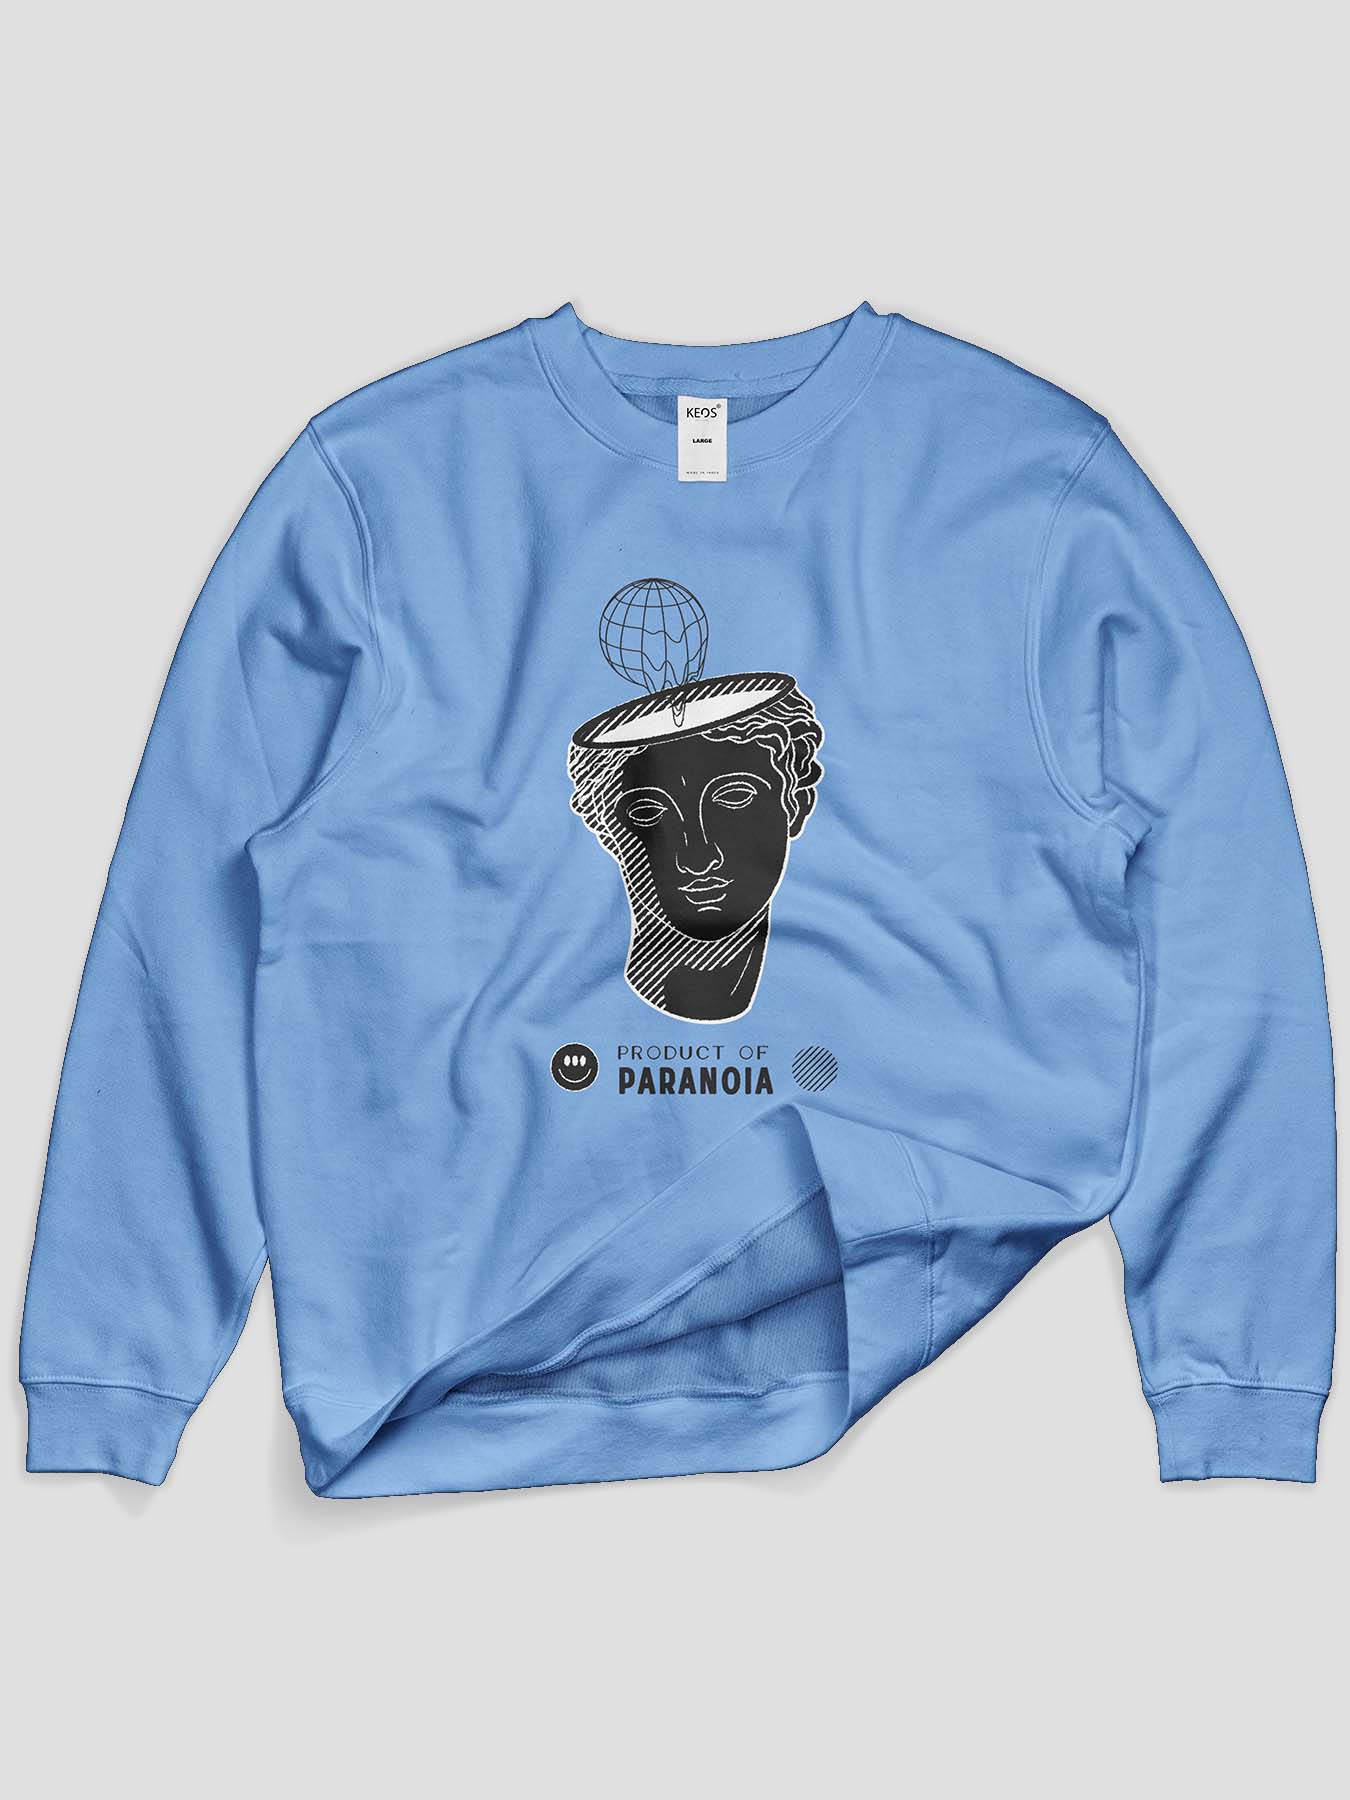 Product of Paranoia Graphic Sweatshirt - keos.life